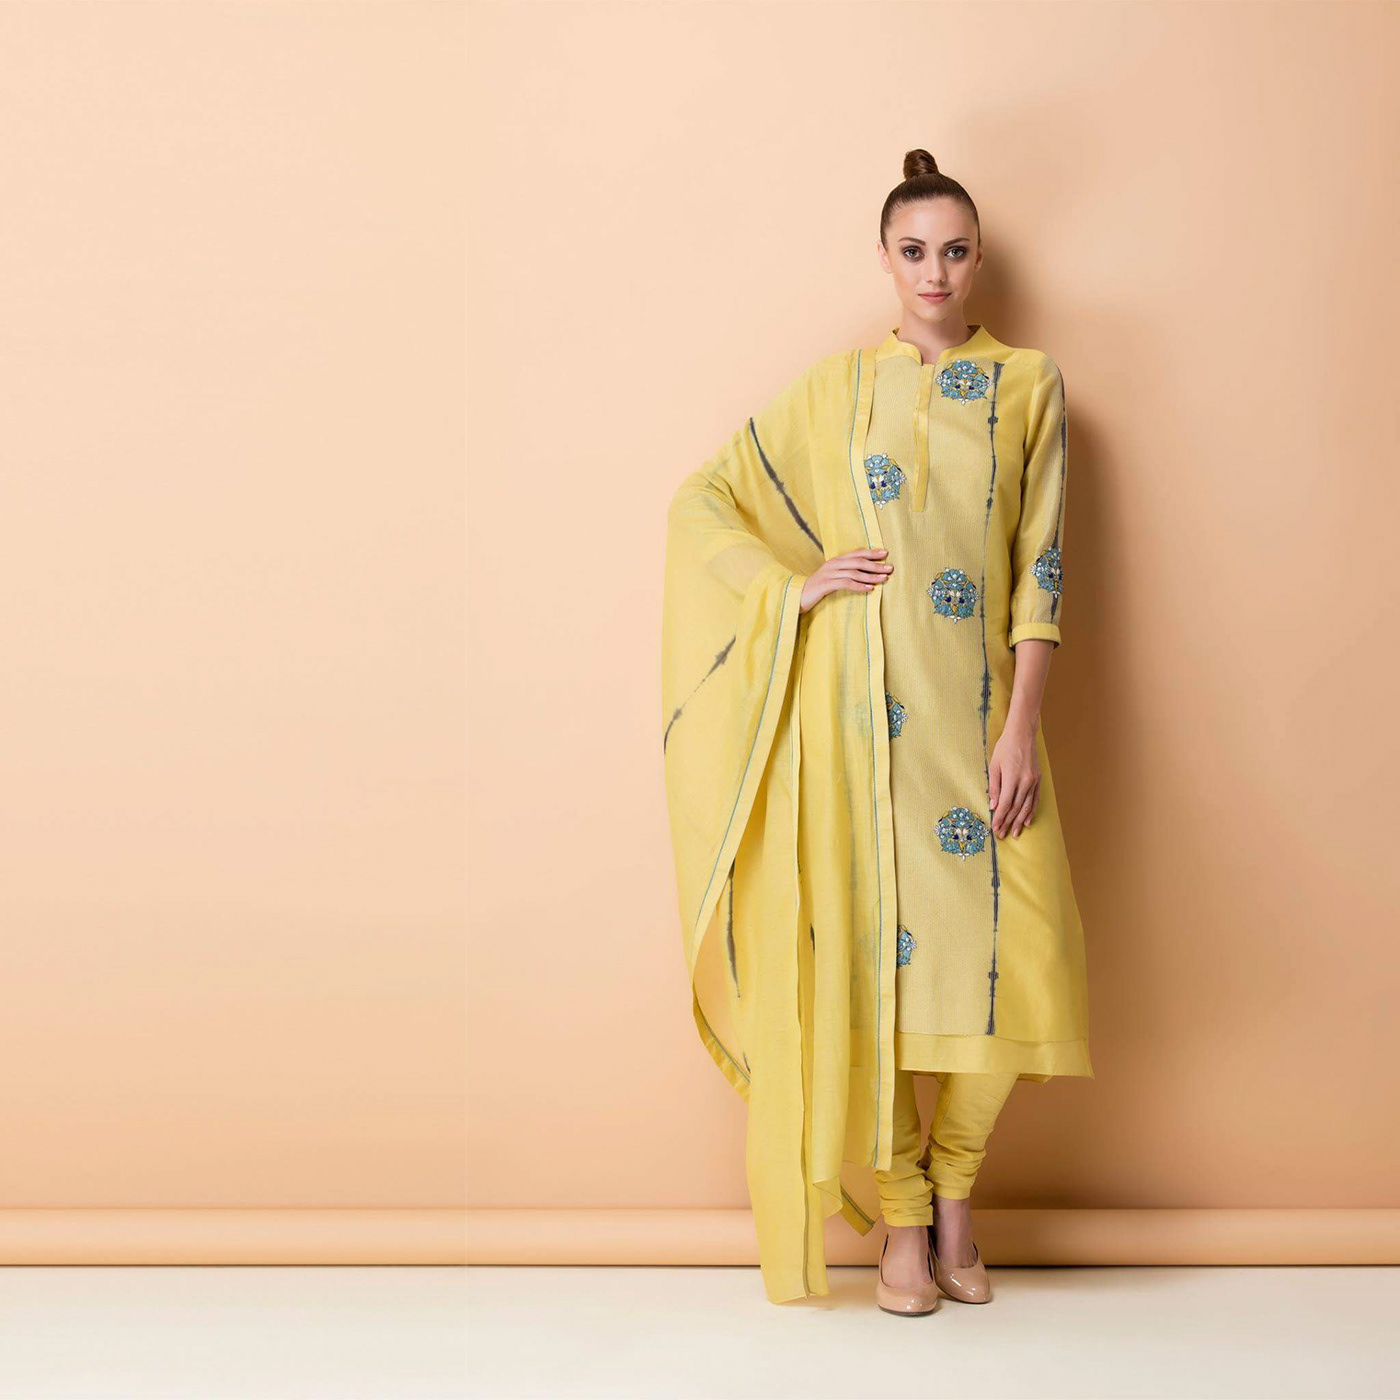 Clothing fabric Fashion  pattern photoshoot print textile